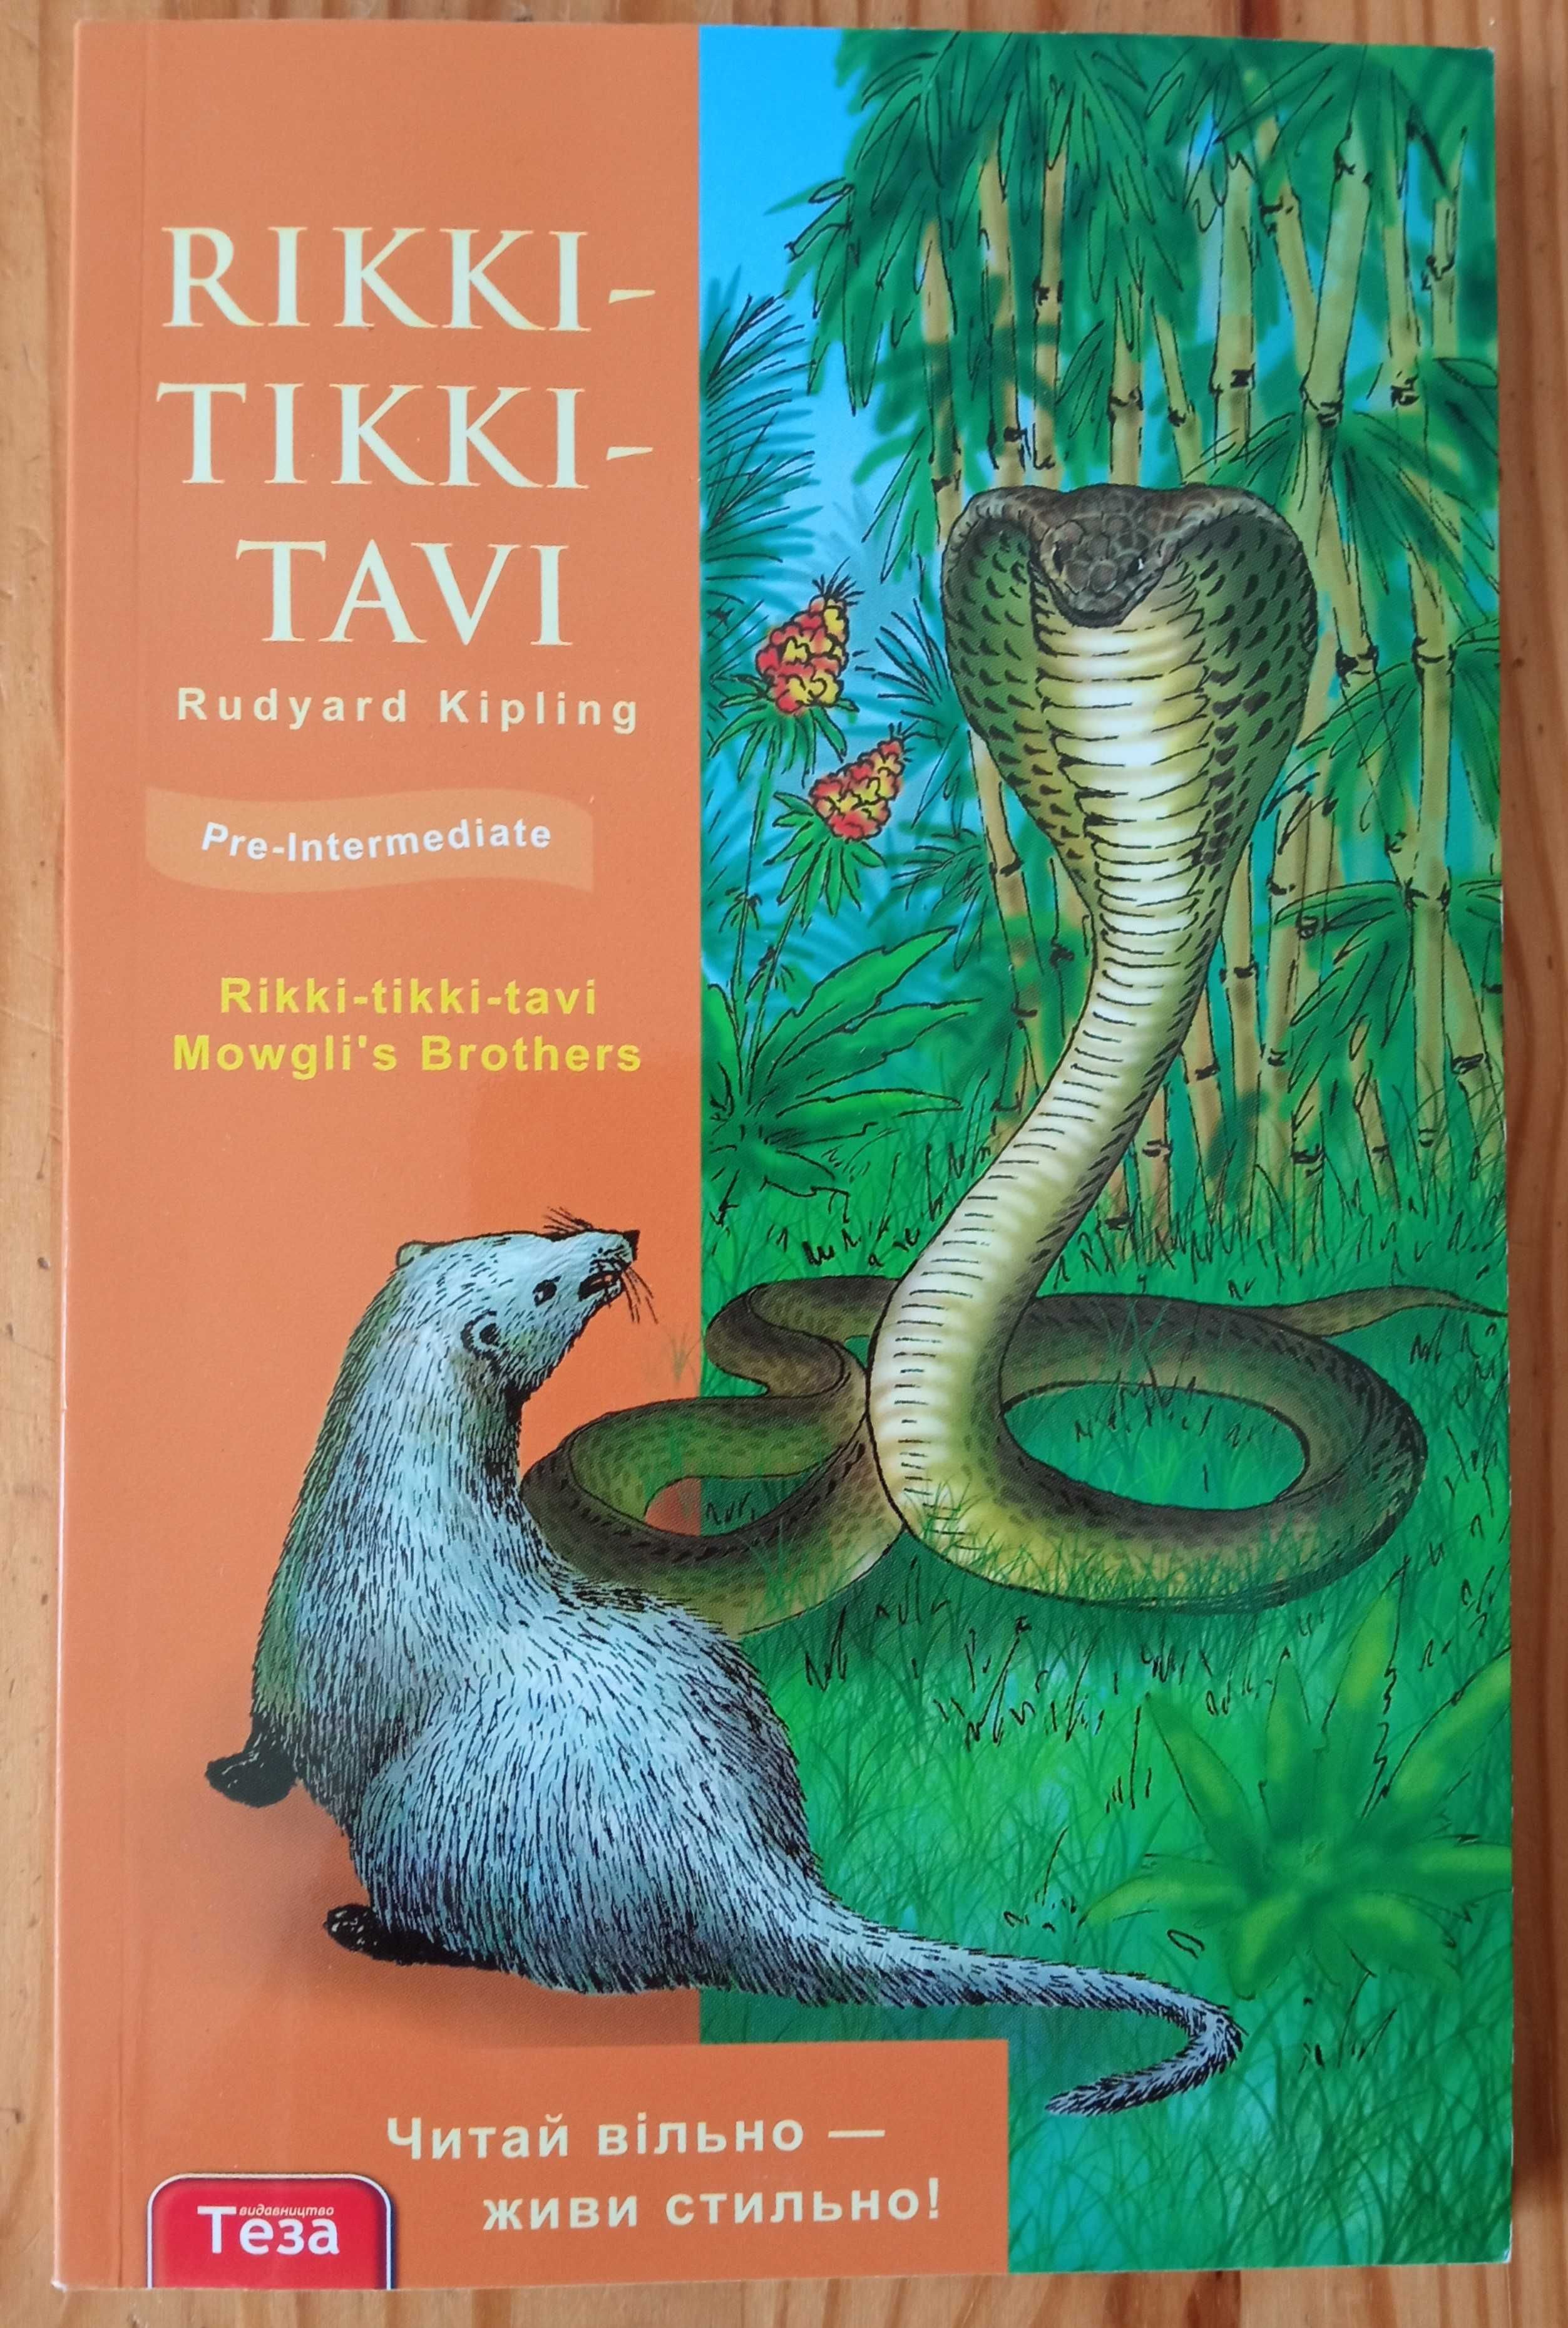 Читанка Rikki-tikki-tavi (Pre-intermediate)